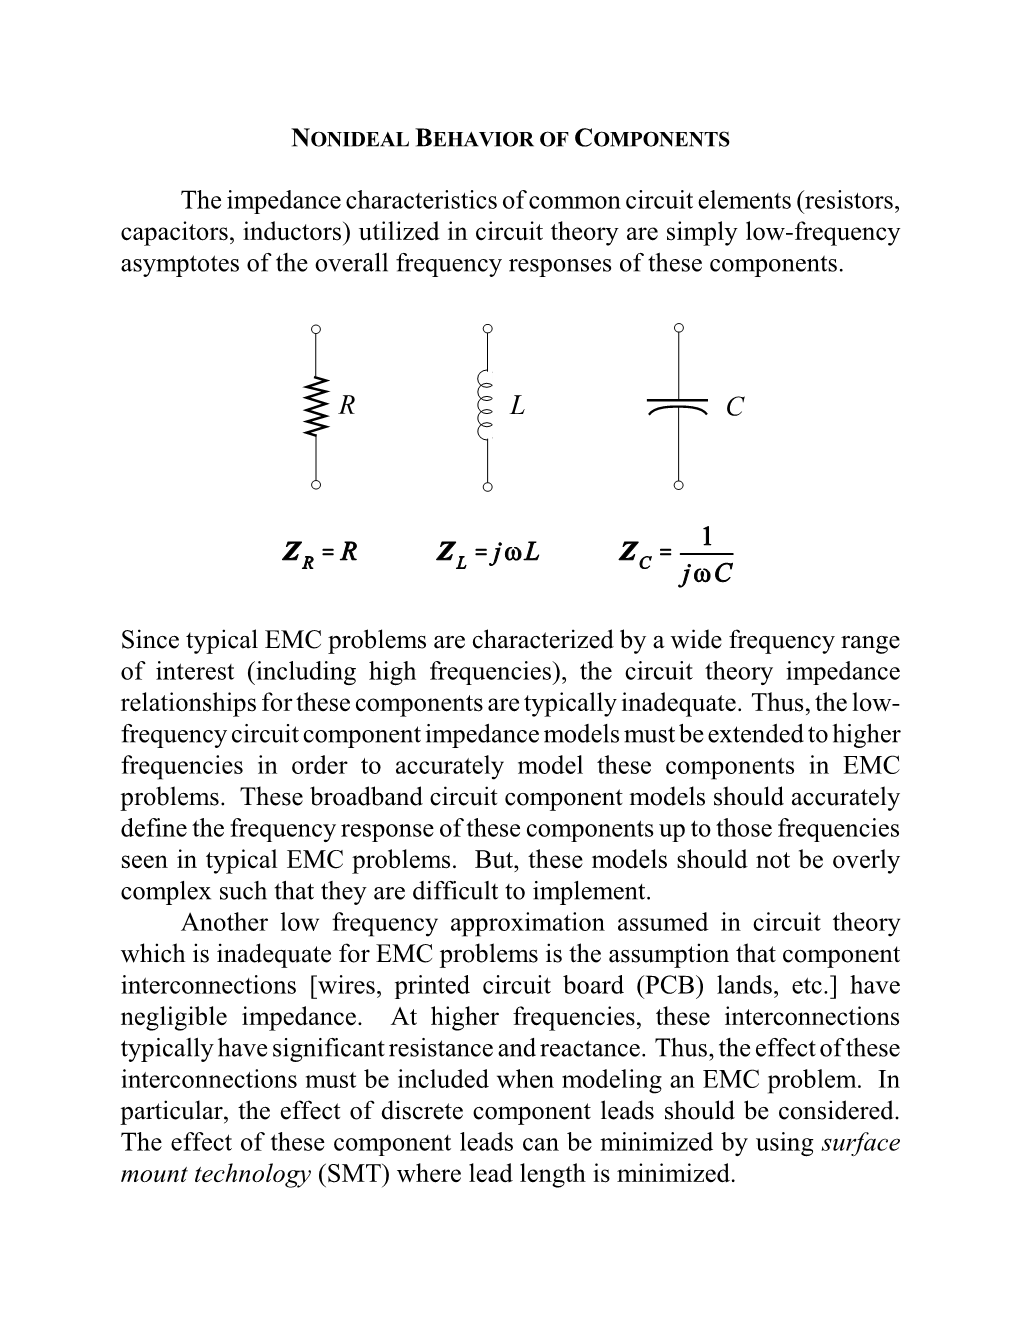 The Impedance Characteristics of Common Circuit Elements (Resistors